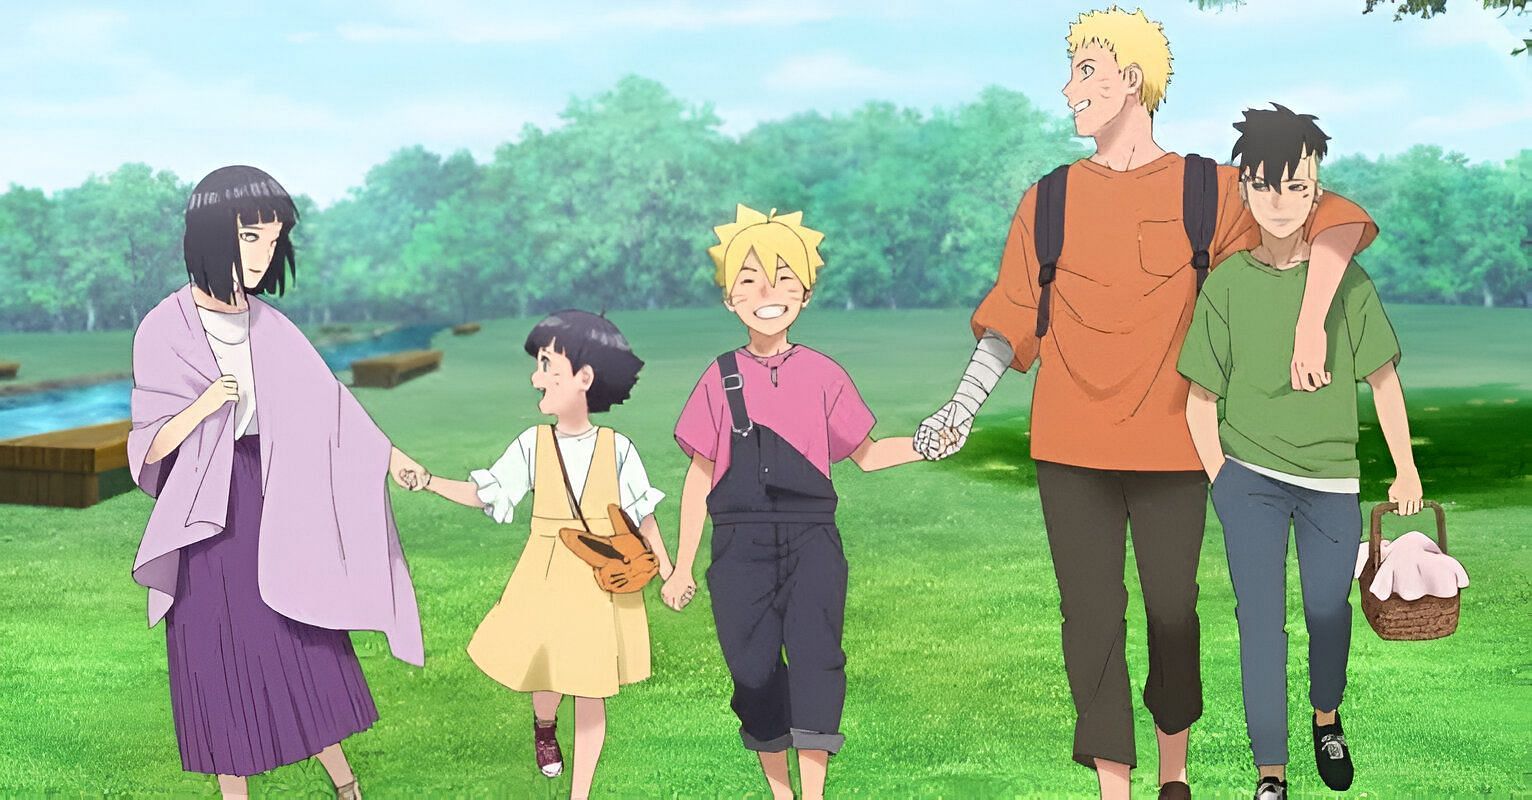 The Uzumaki family as seen in the anime (Image via Studio Pierrot)